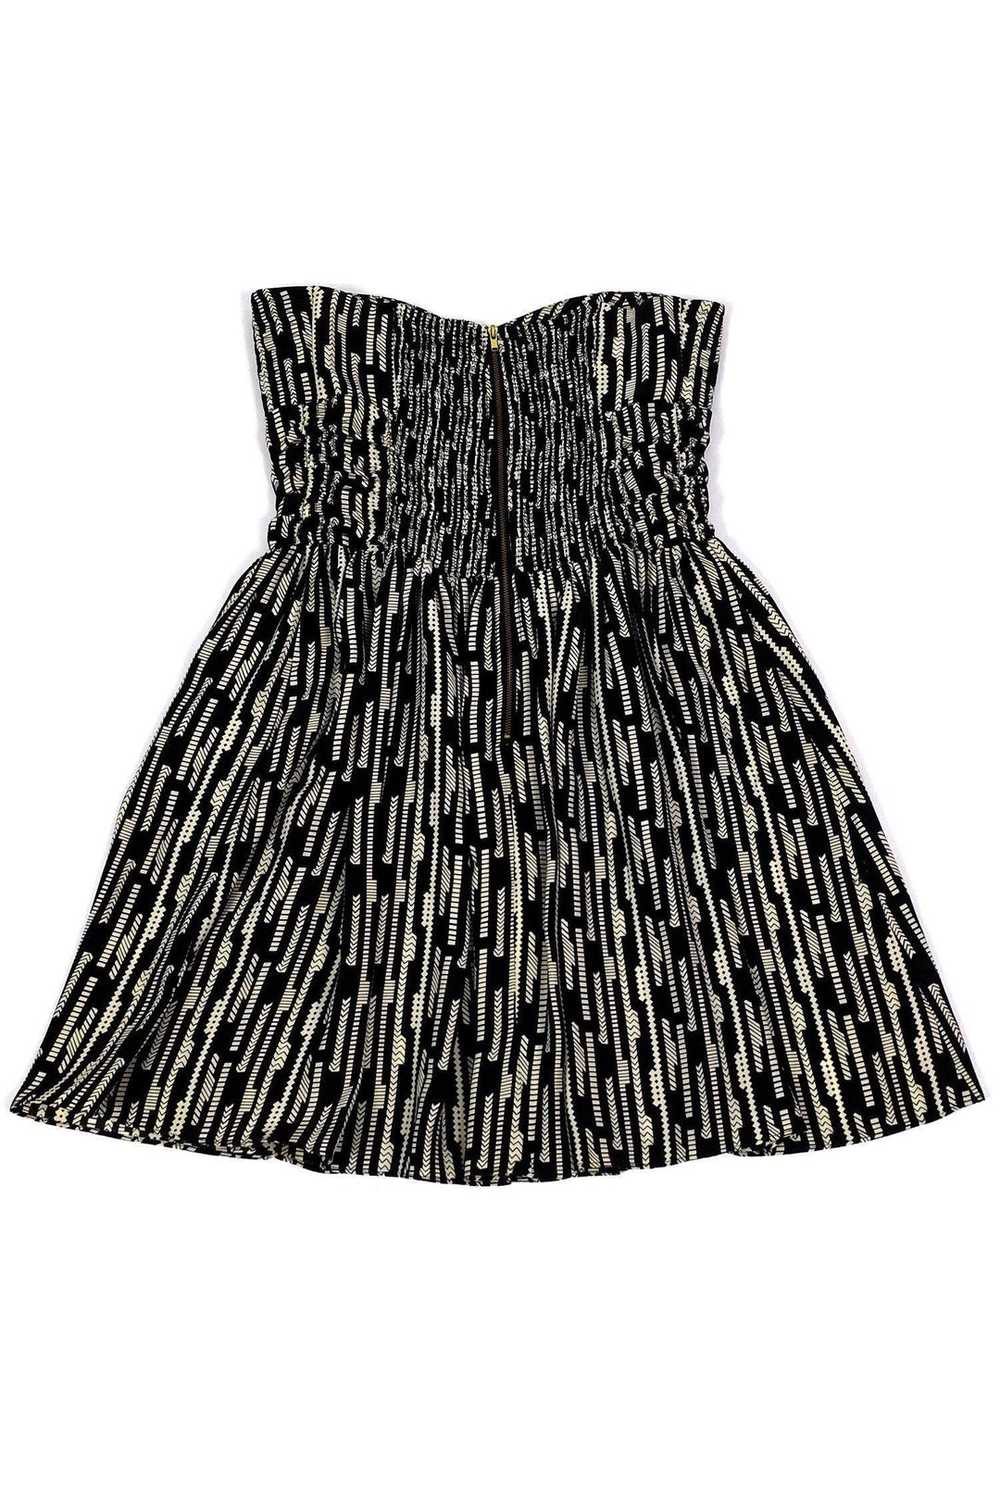 Parker - Black & White Strapless Dress Sz L - image 2